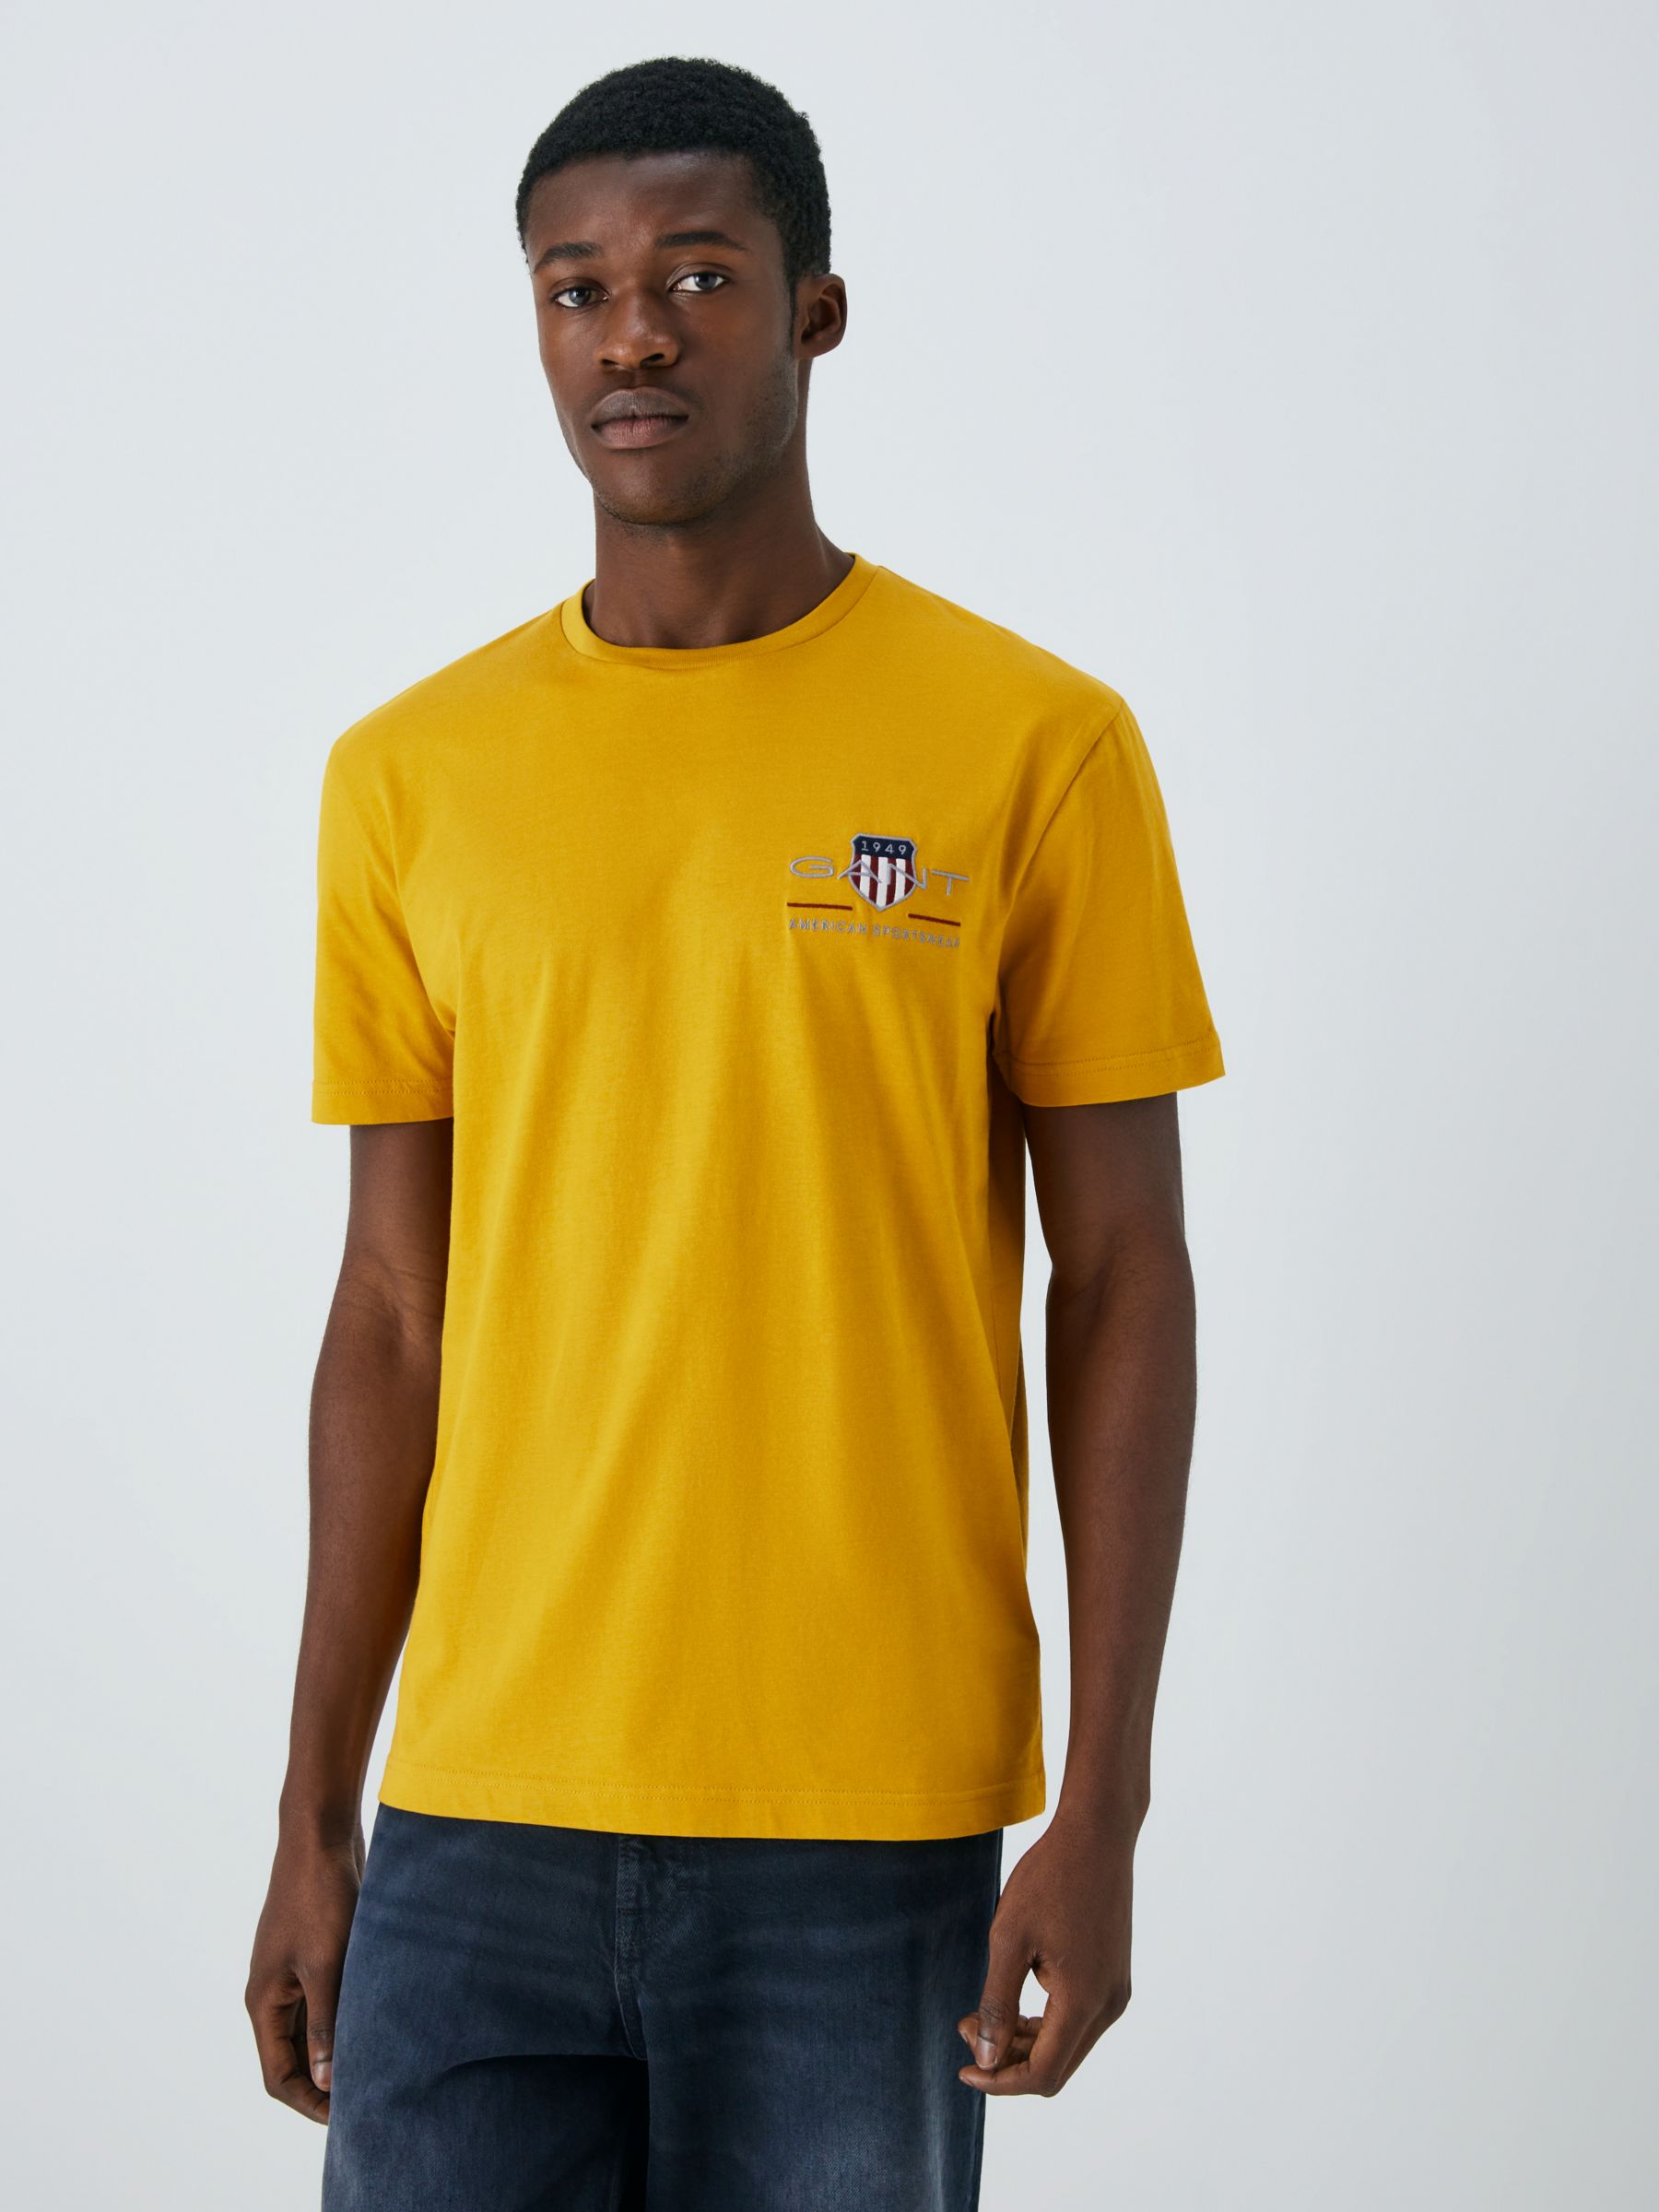 GANT Archive Shield Graphic T-Shirt, Mustard Yellow, S